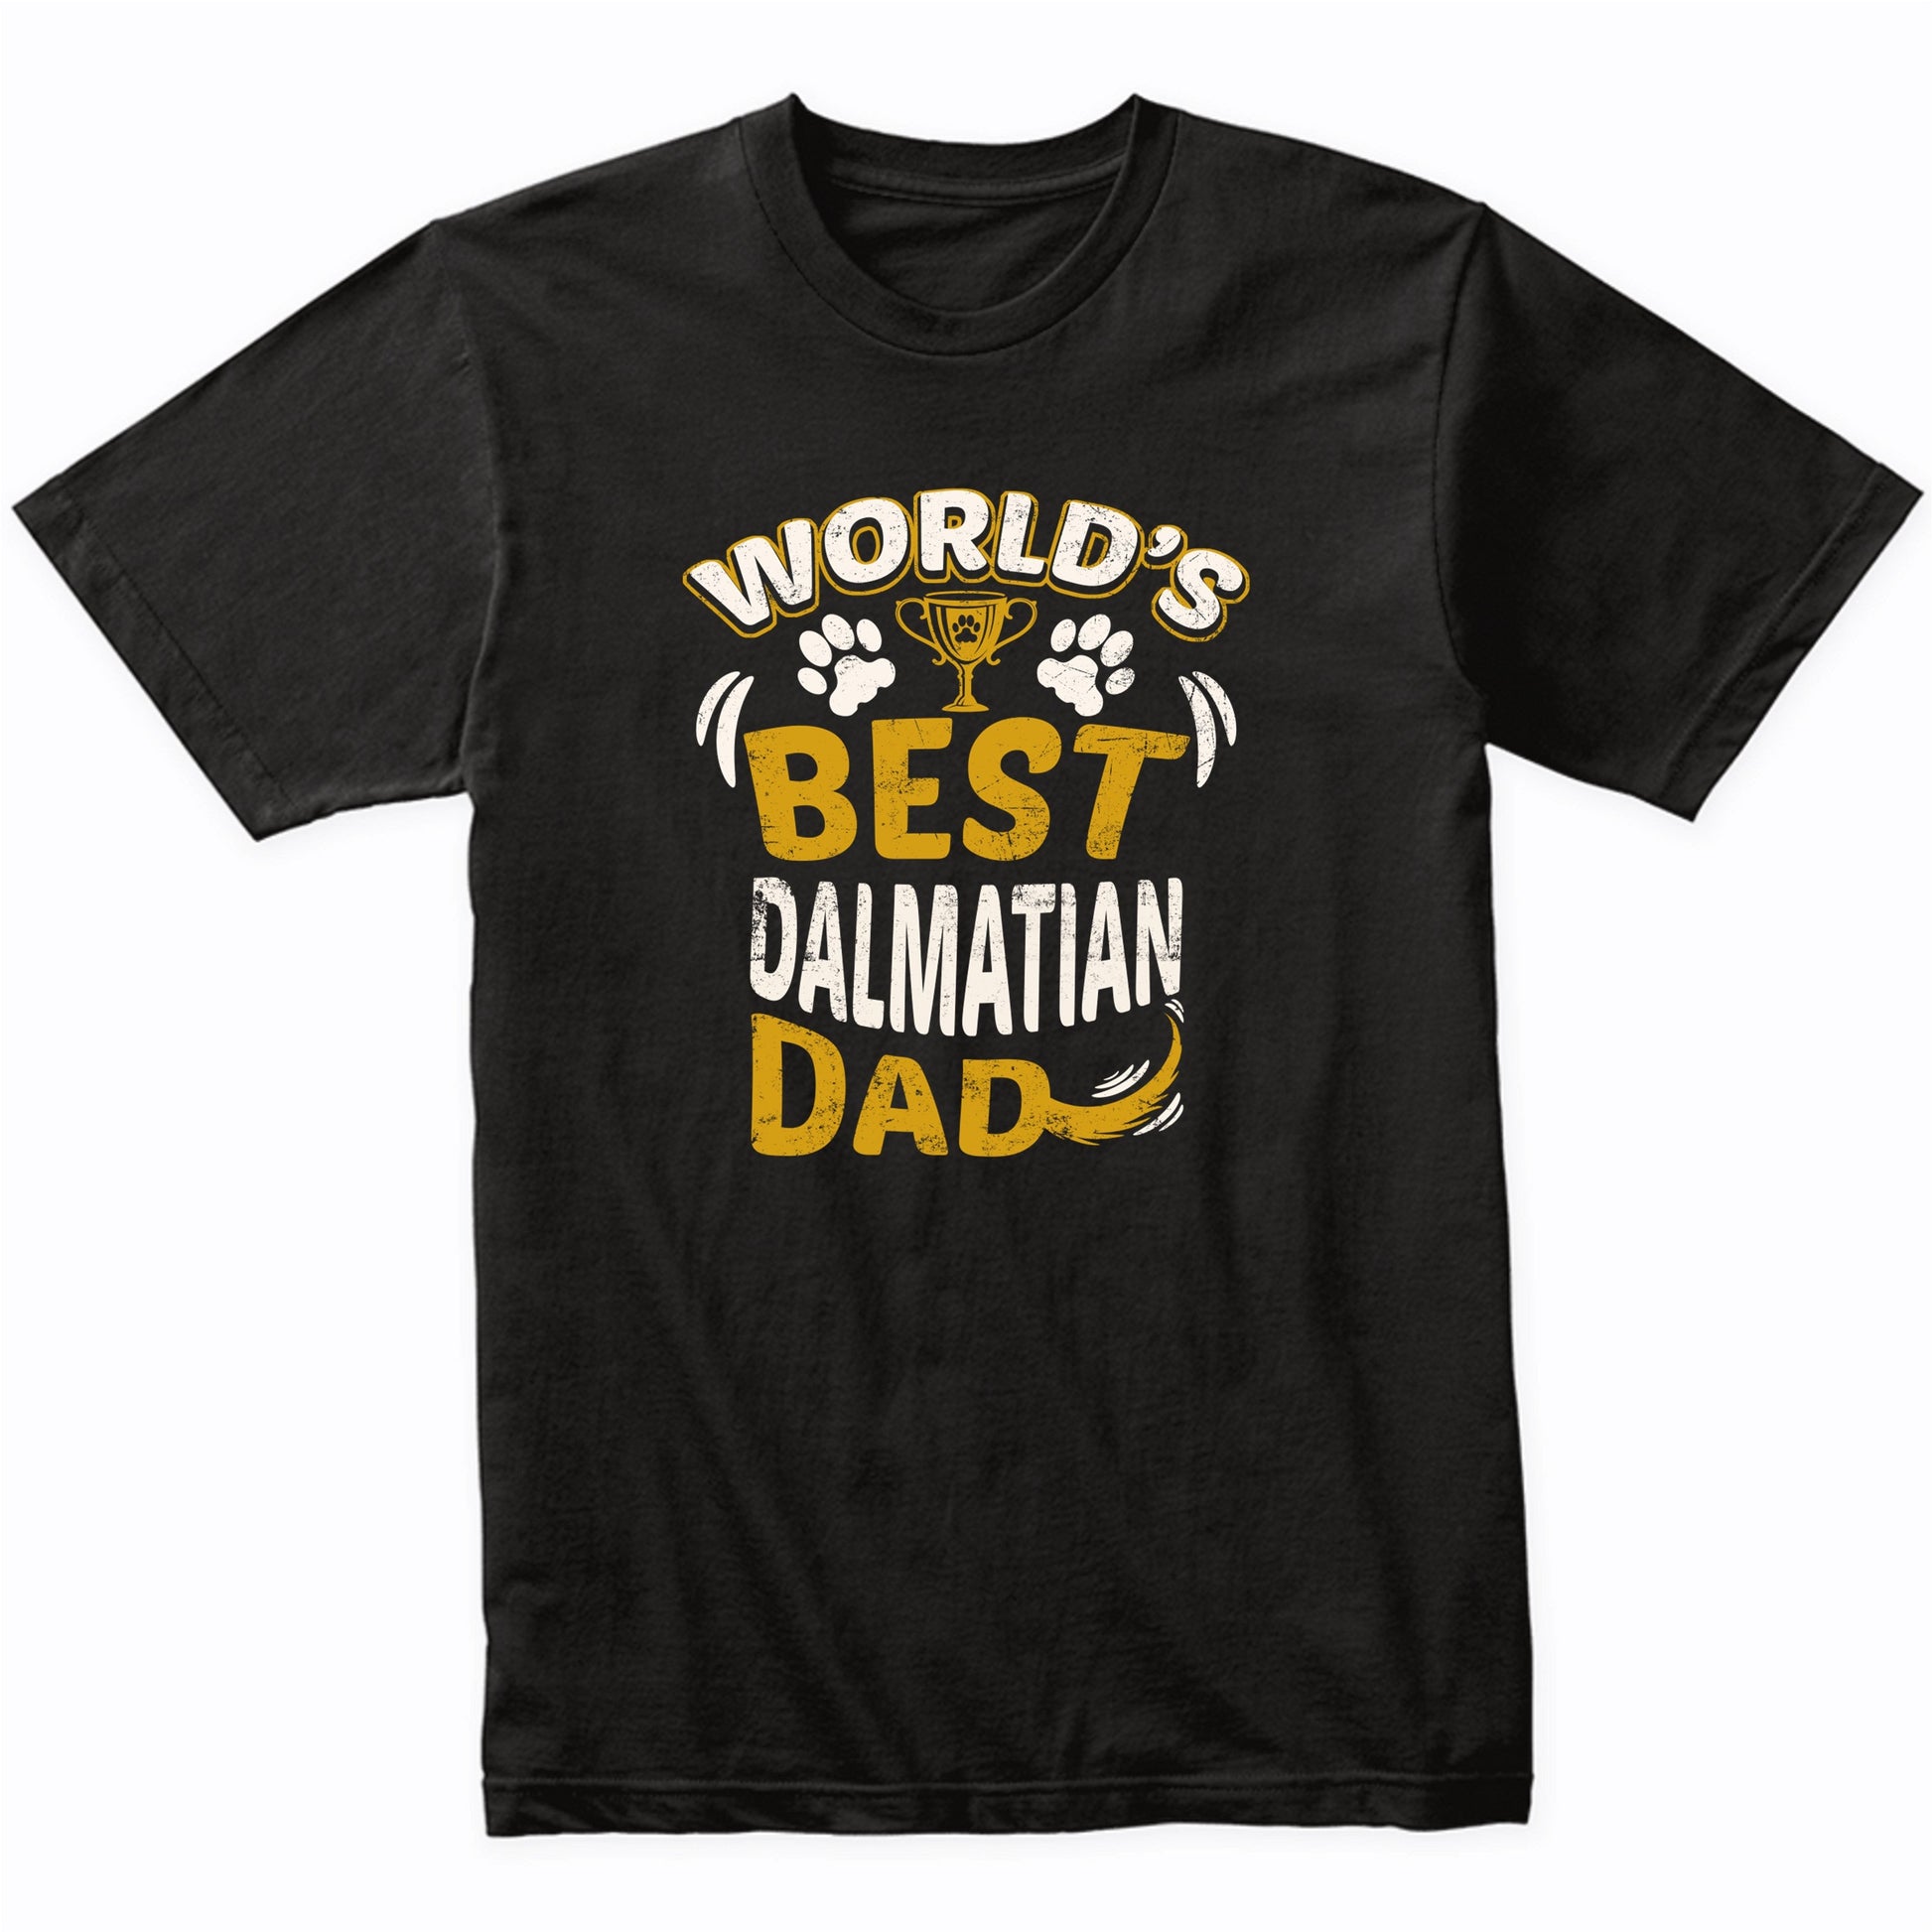 World's Best Dalmatian Dad Graphic T-Shirt